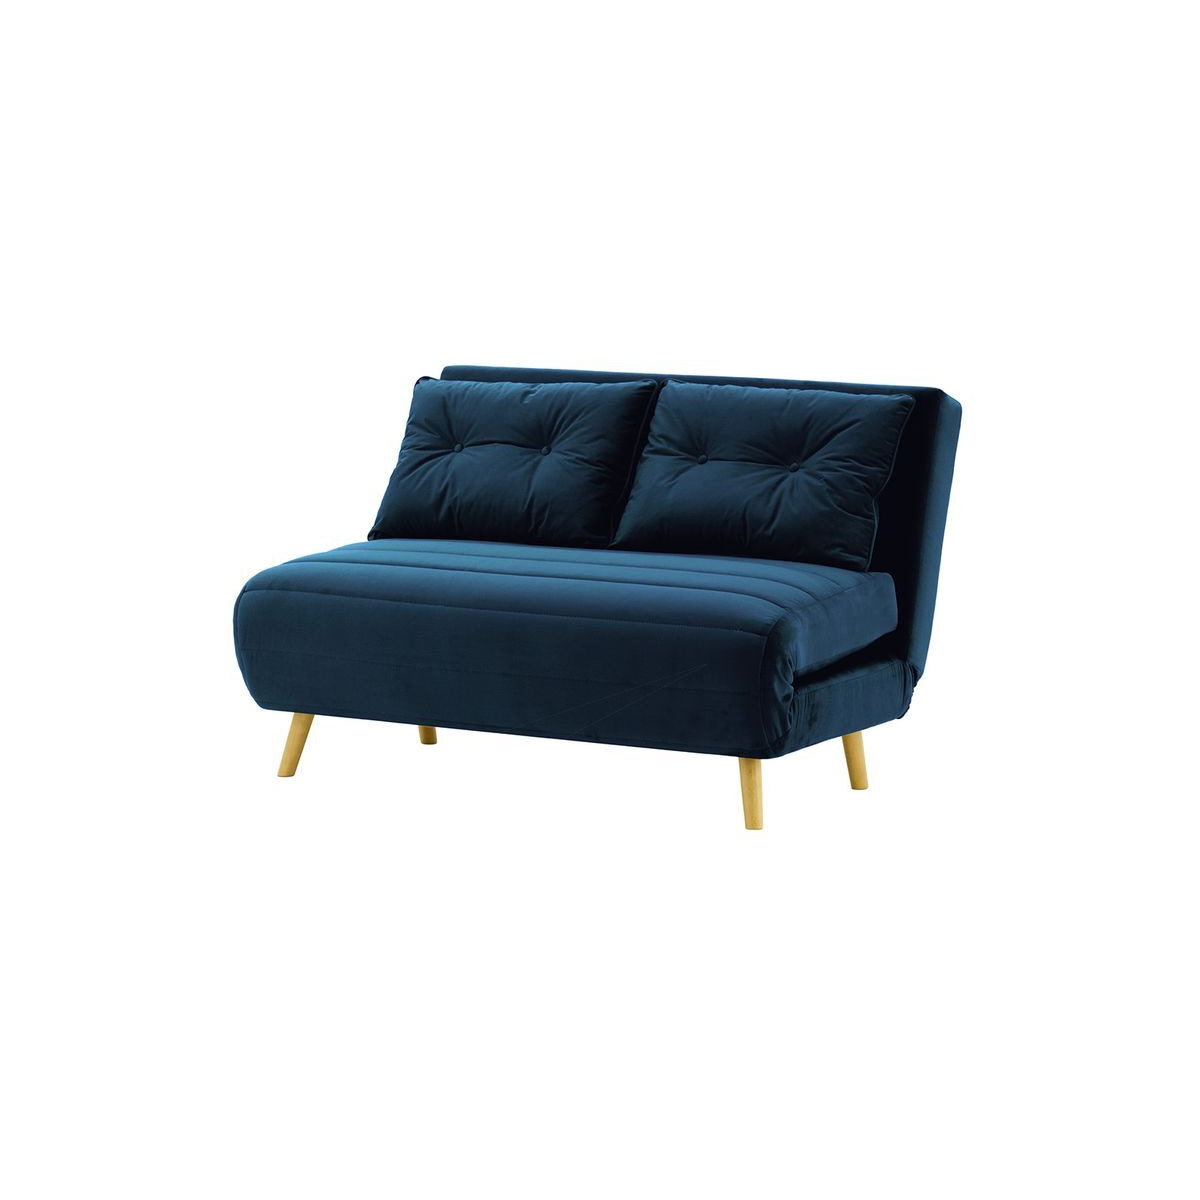 Flic Double Sofa Bed - width 120 cm, lime, Leg colour: aveo - image 1